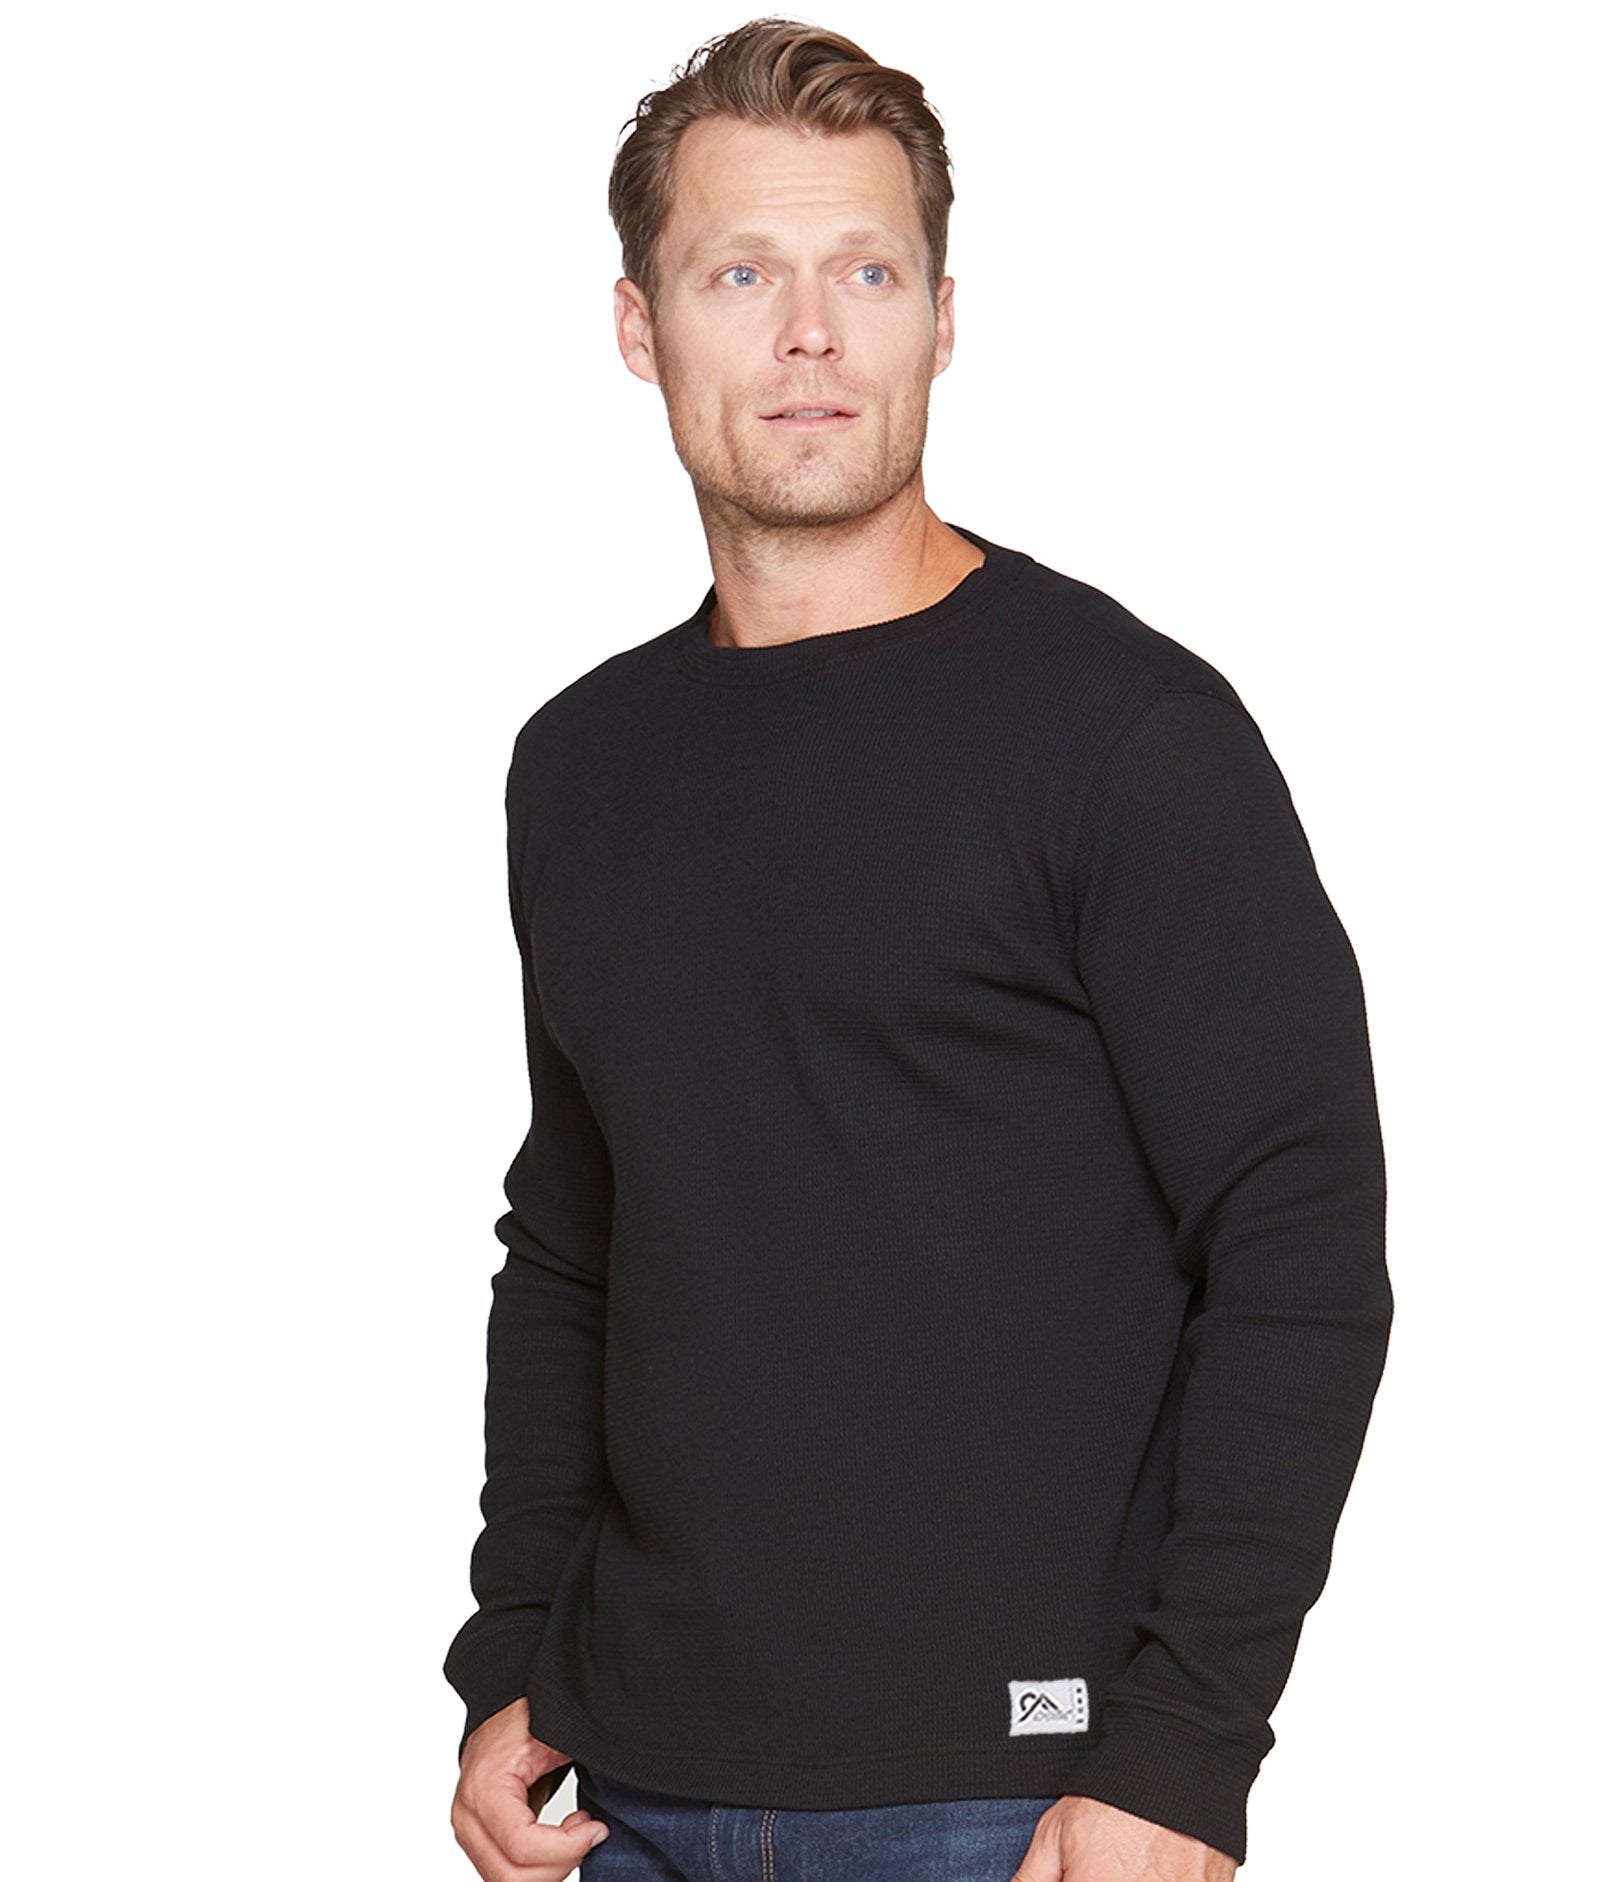 Men's Black Furnace Long Sleeve Thermal Shirt